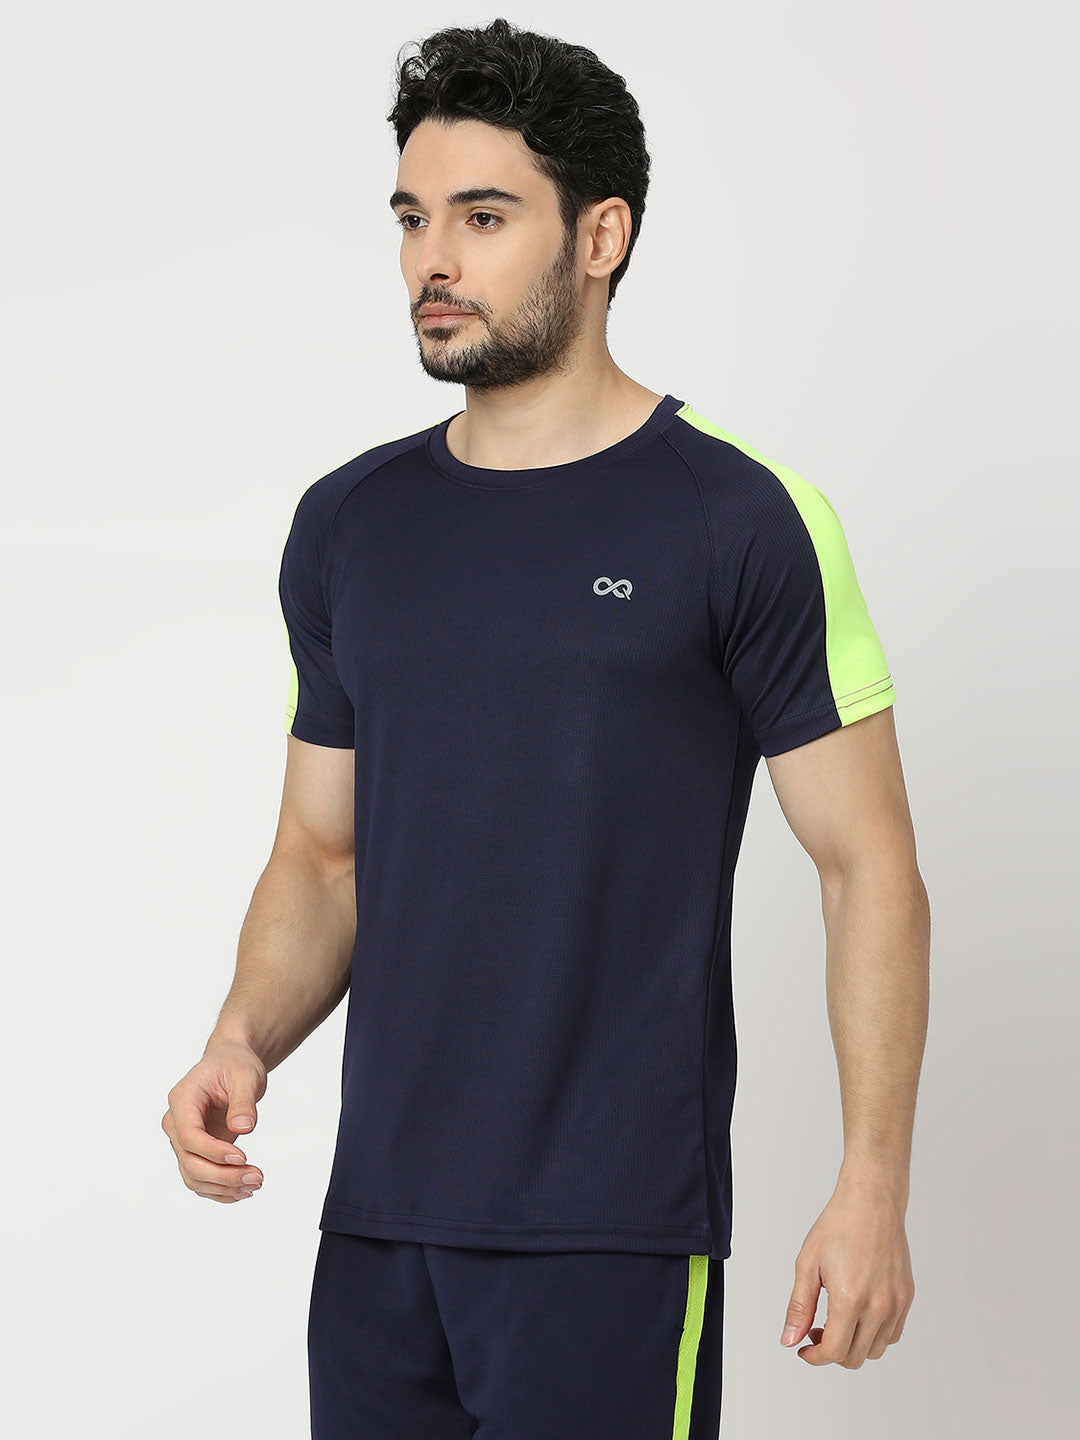 Men's Striped Sports T-Shirt - Navy Blue